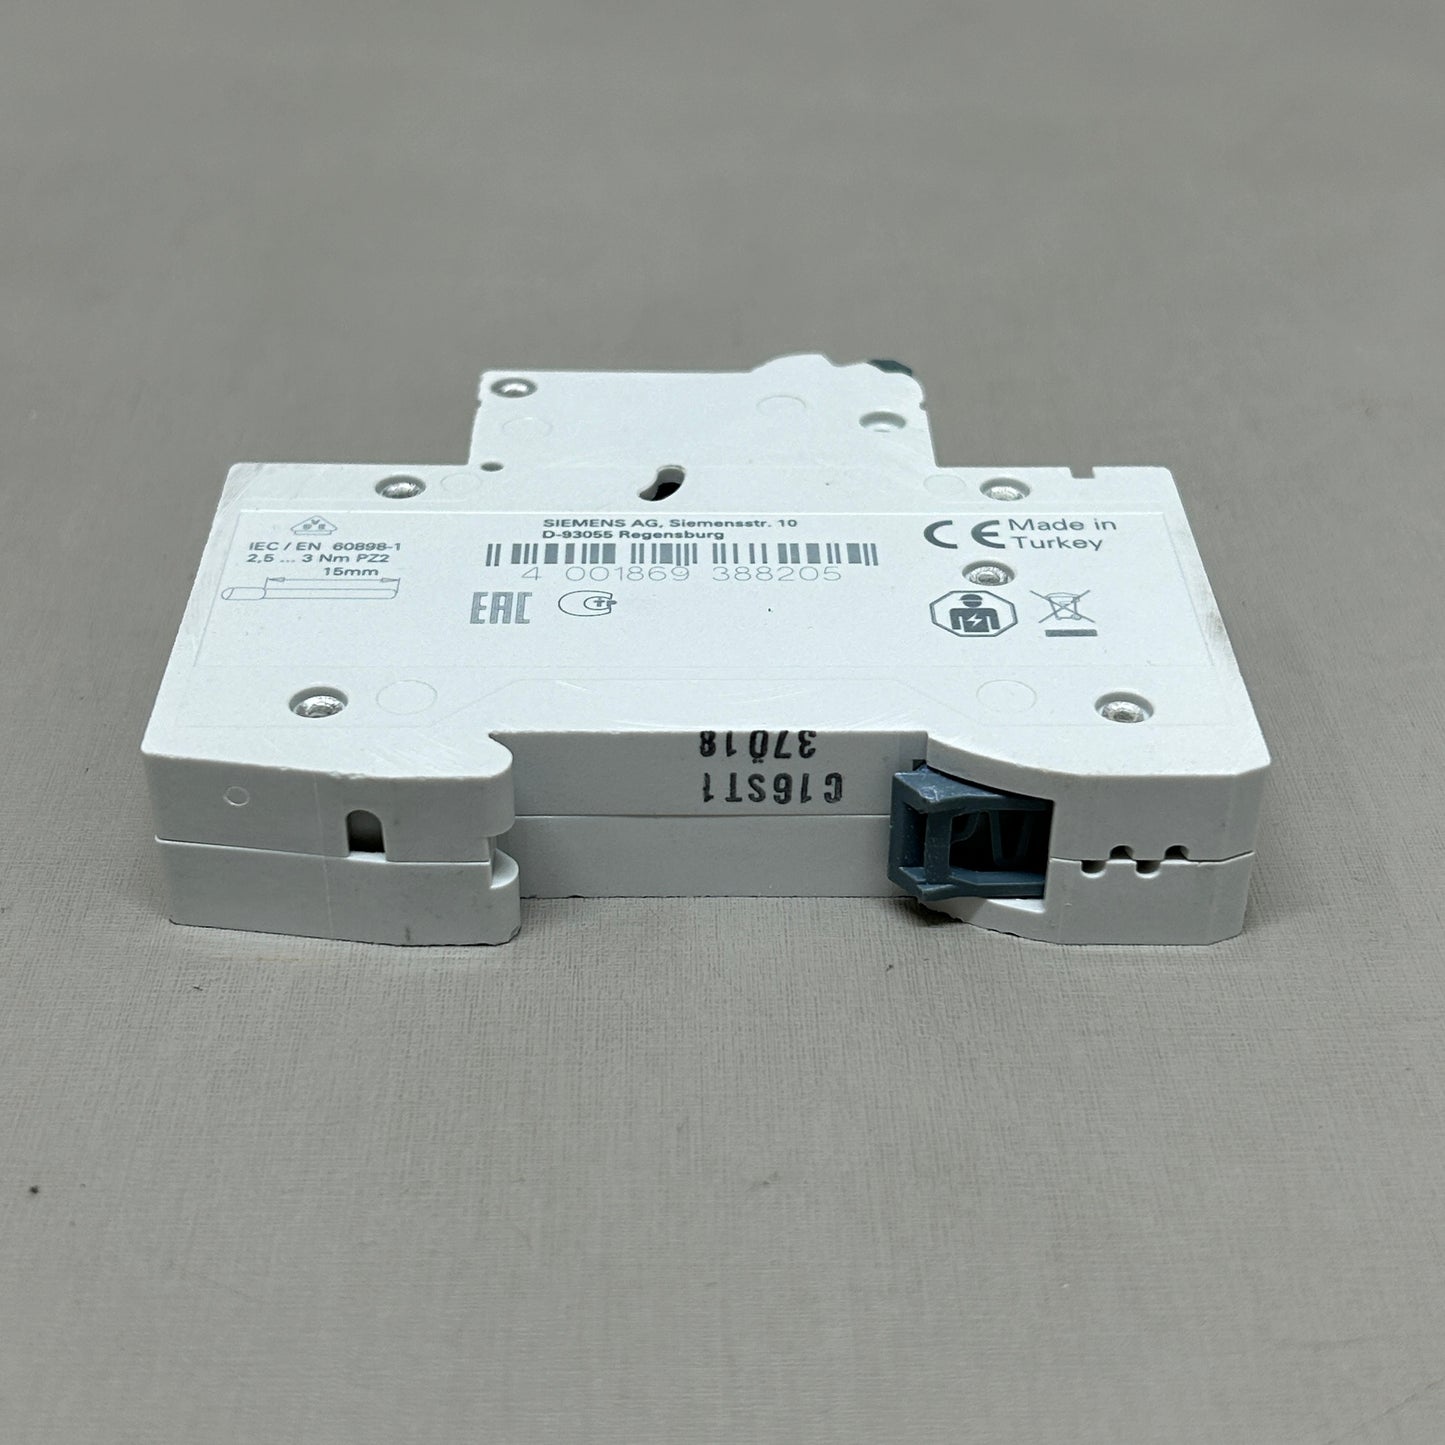 SIEMENS Miniature Circuit Breaker 16 AMP 230-400 VAC Off-White 5SL6116-7 (New)